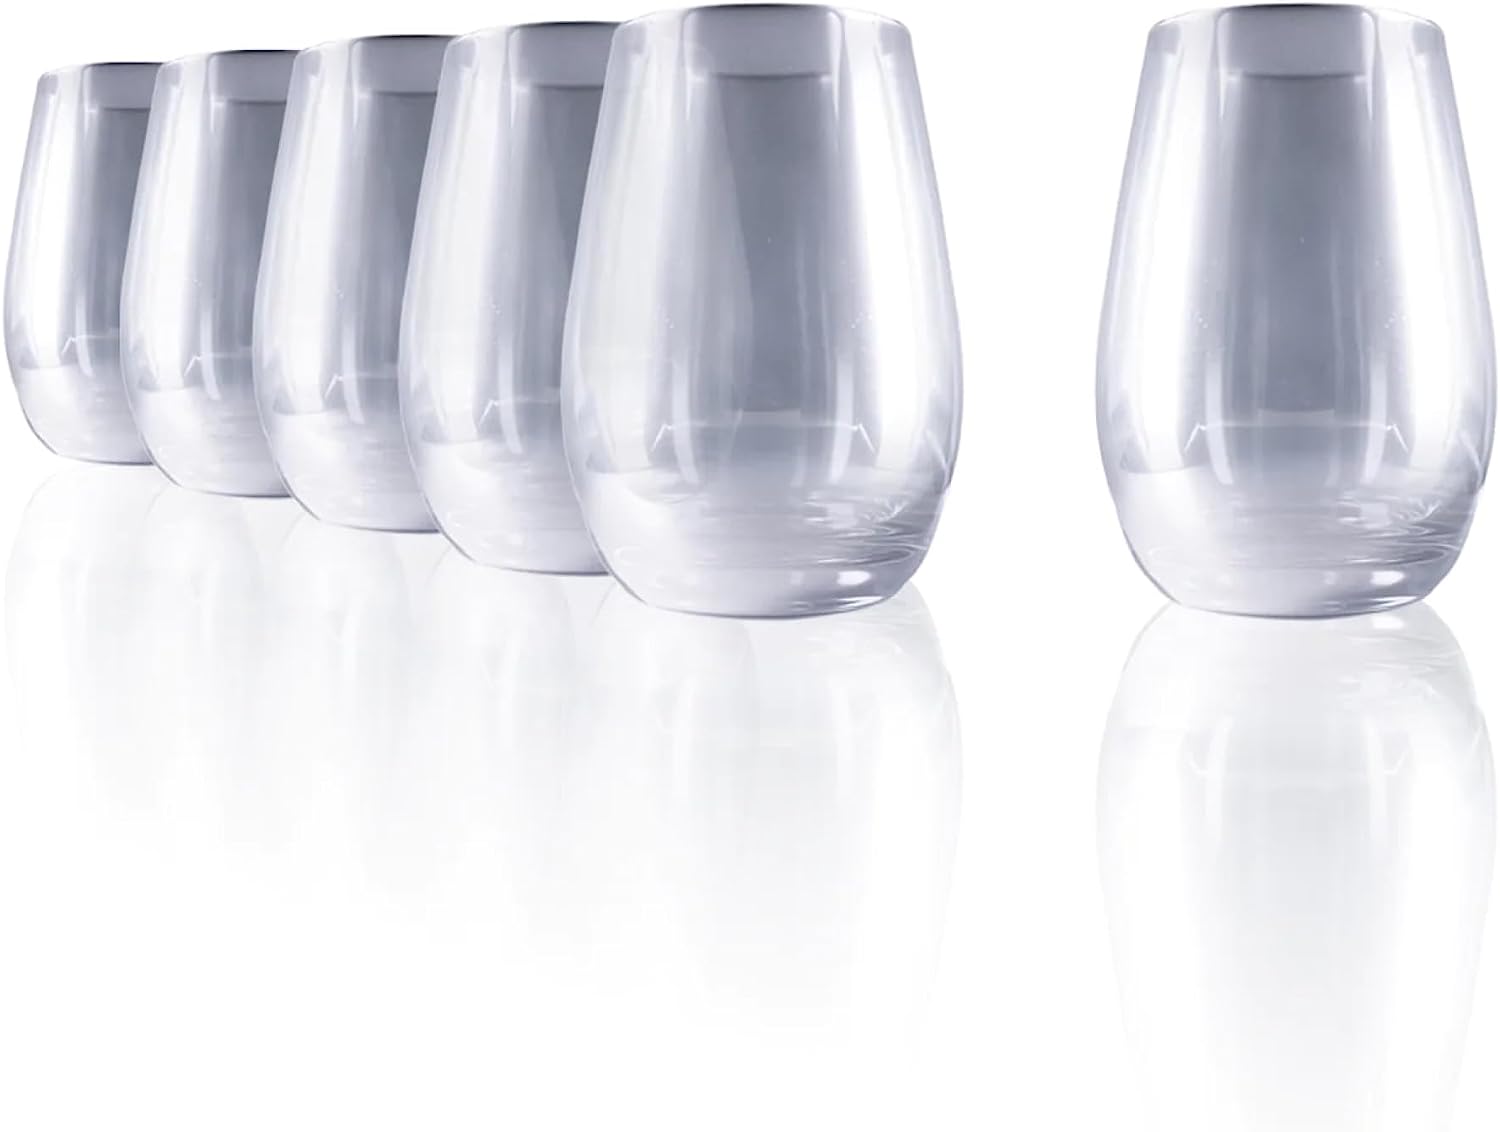 Stölzle Lausitz Long Drink Glasses Mirror Silver / Set of 6 Drinking Glasses / Cocktail Glasses / High-Quality Long Drink Glasses Set in Mirrored Look / Gin Glasses / Highball Glasses